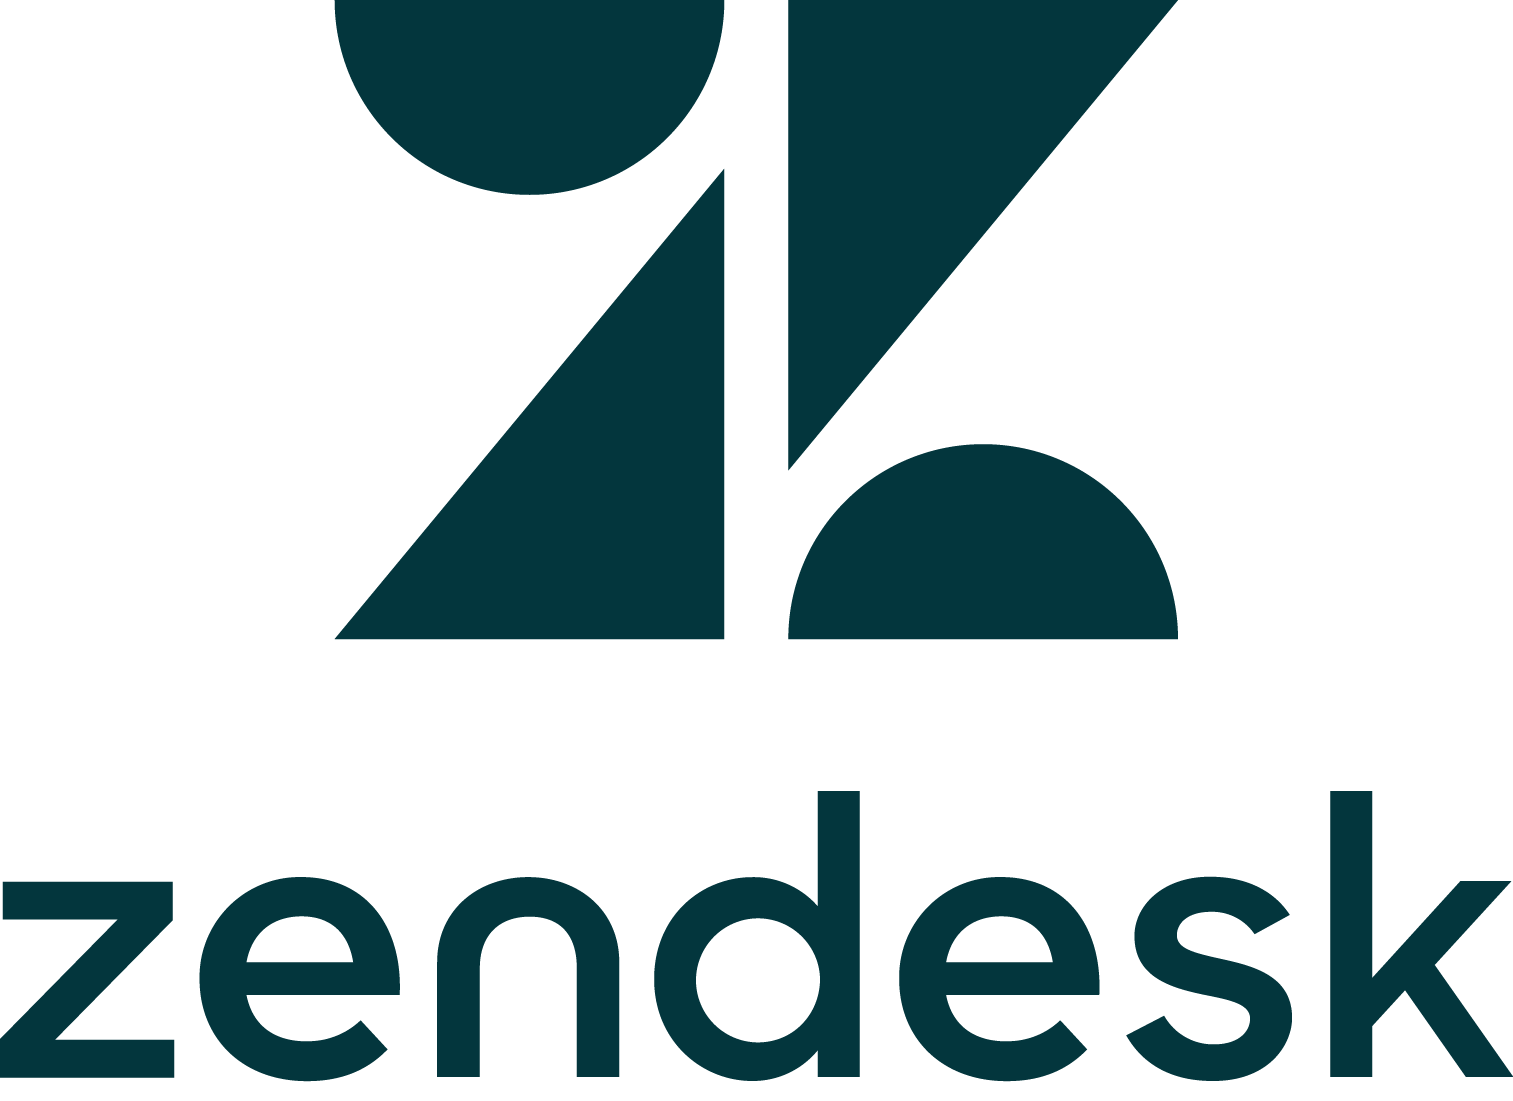 Zendesk Support